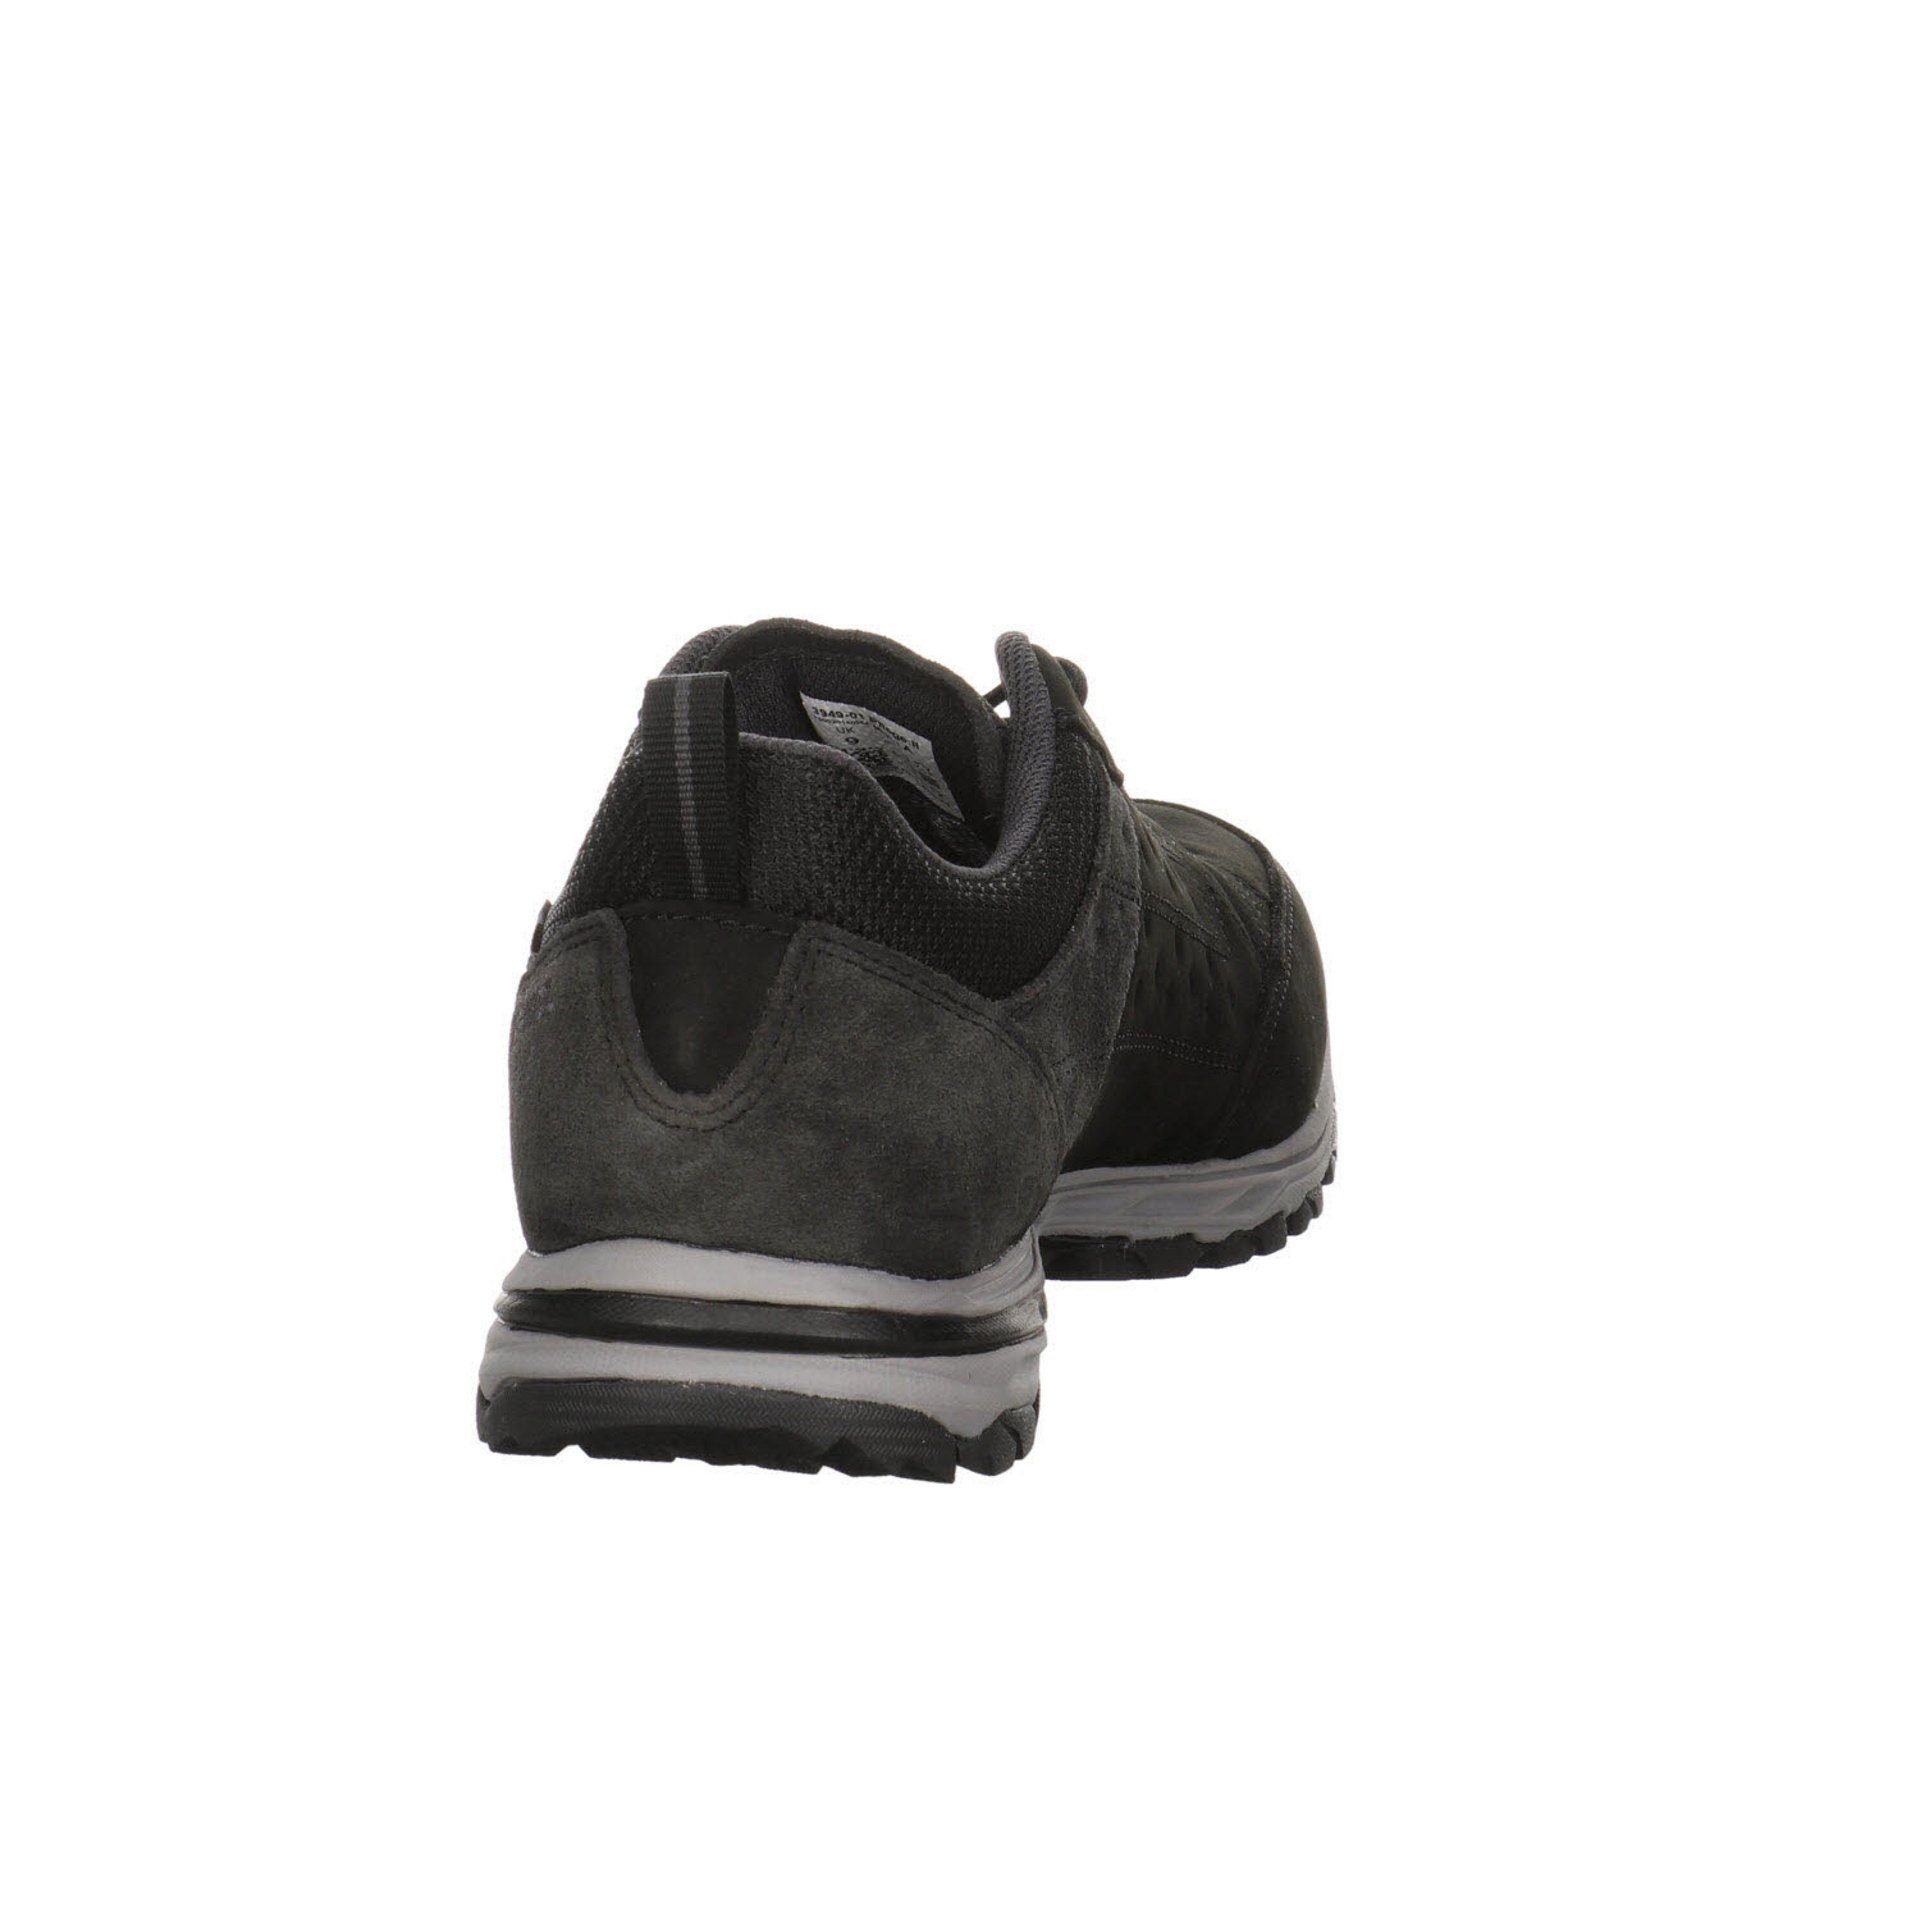 Meindl Leder-/Textilkombination Outdoor Outdoorschuh schwarz GTX Durban Outdoorschuh Herren dunkel Schuhe